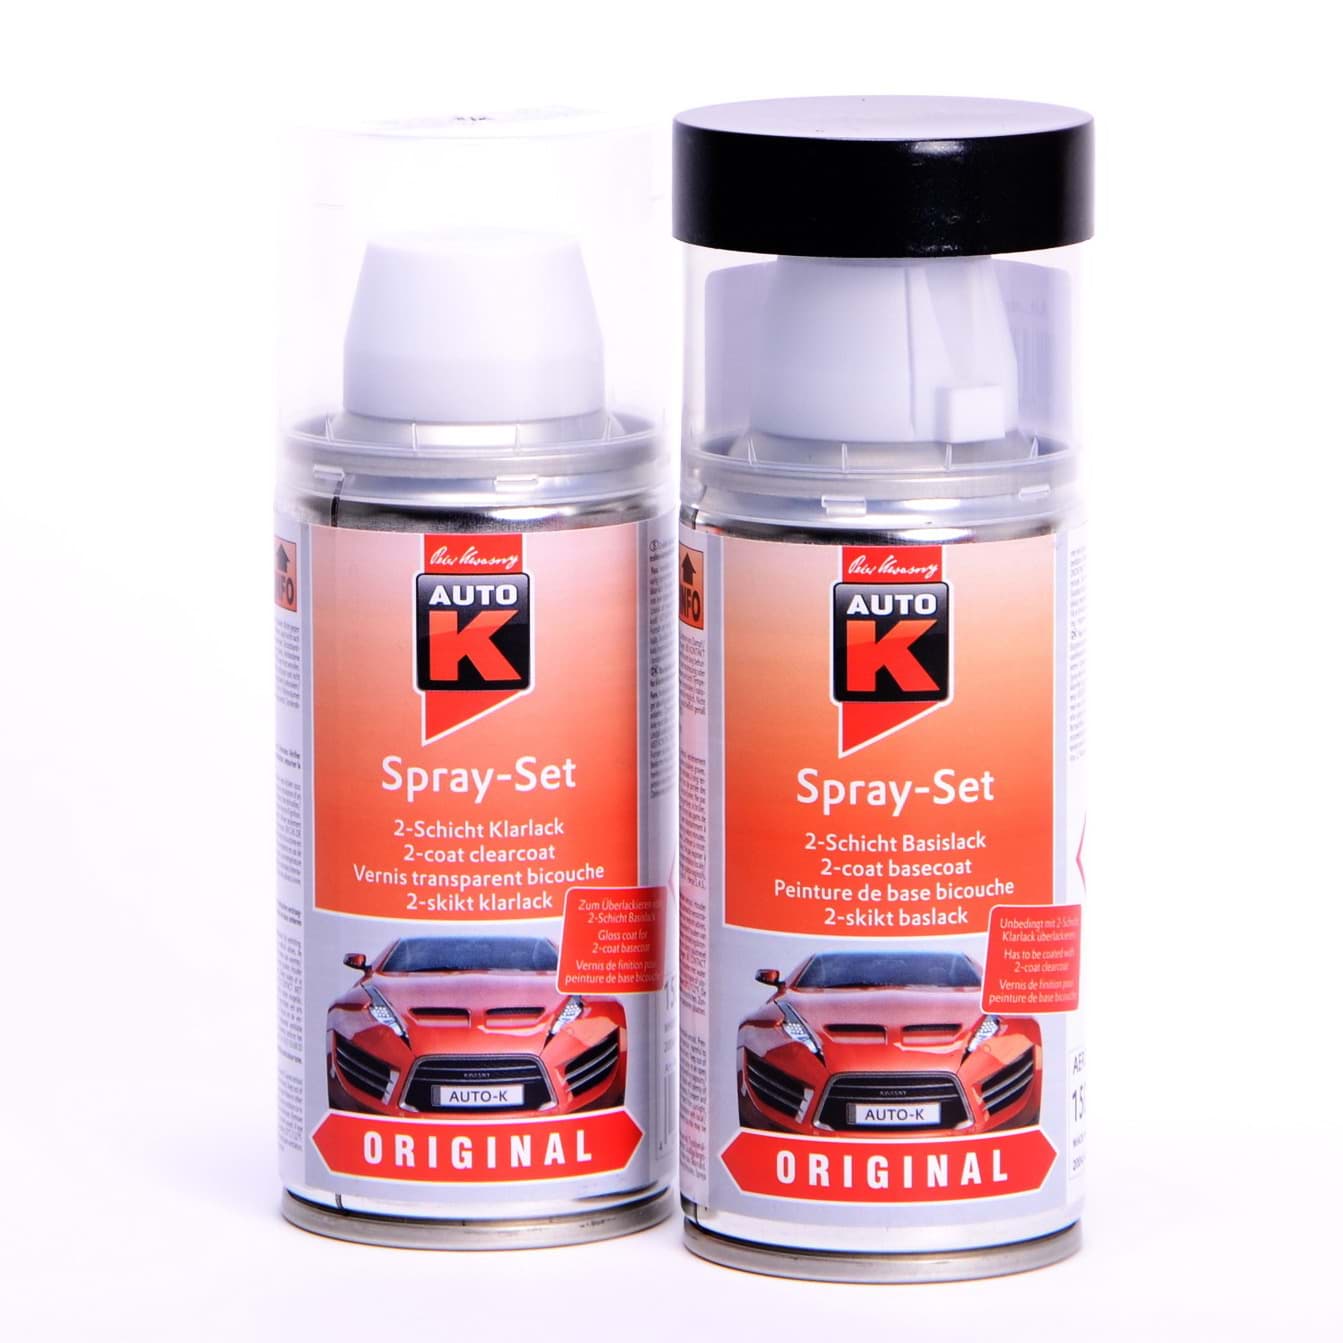 Afbeelding van Auto-K Spray-Set Autolack für Renault 640 Gris Iceberg met 43379